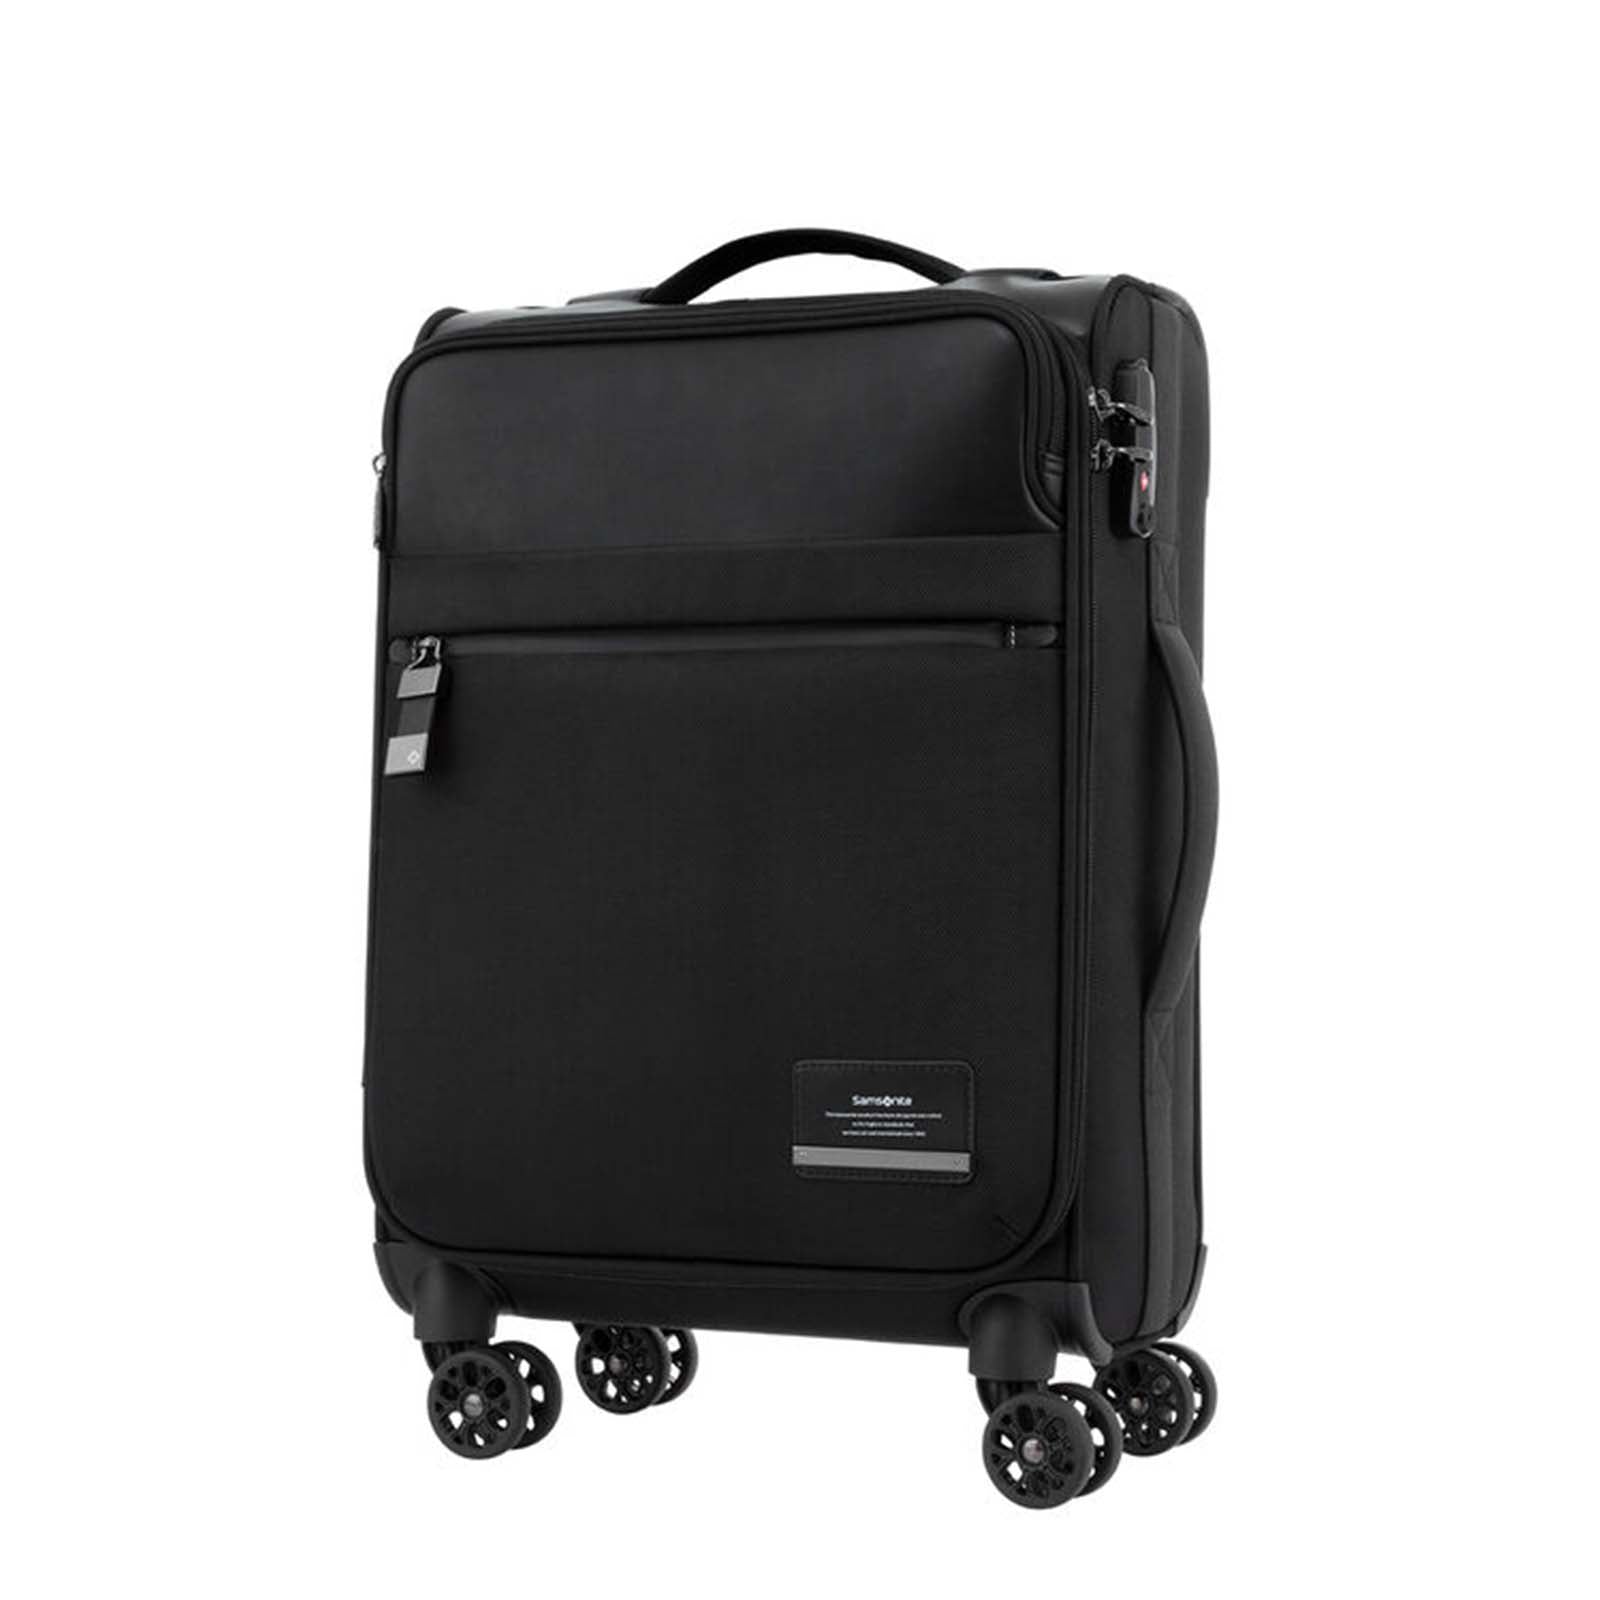 Samsonite_Vestor_55cm_Mobile_Office_Suitcase_Black_Front.jpg